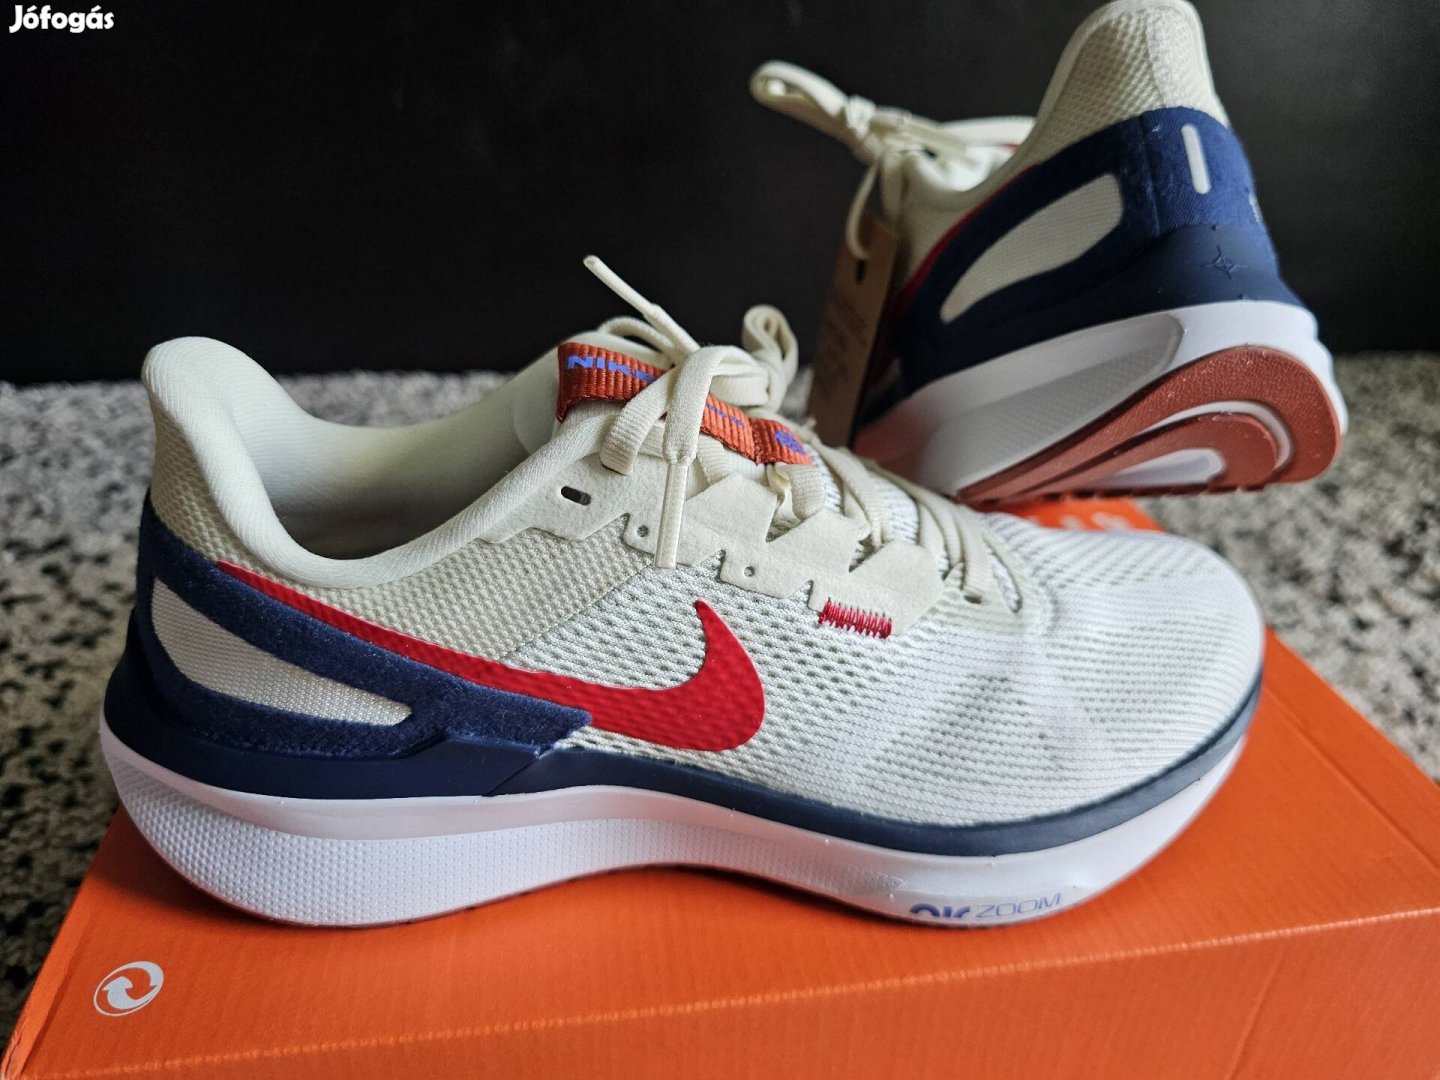 Nike Air Zoom Structure 25 világos 38.5-es futó cipő.